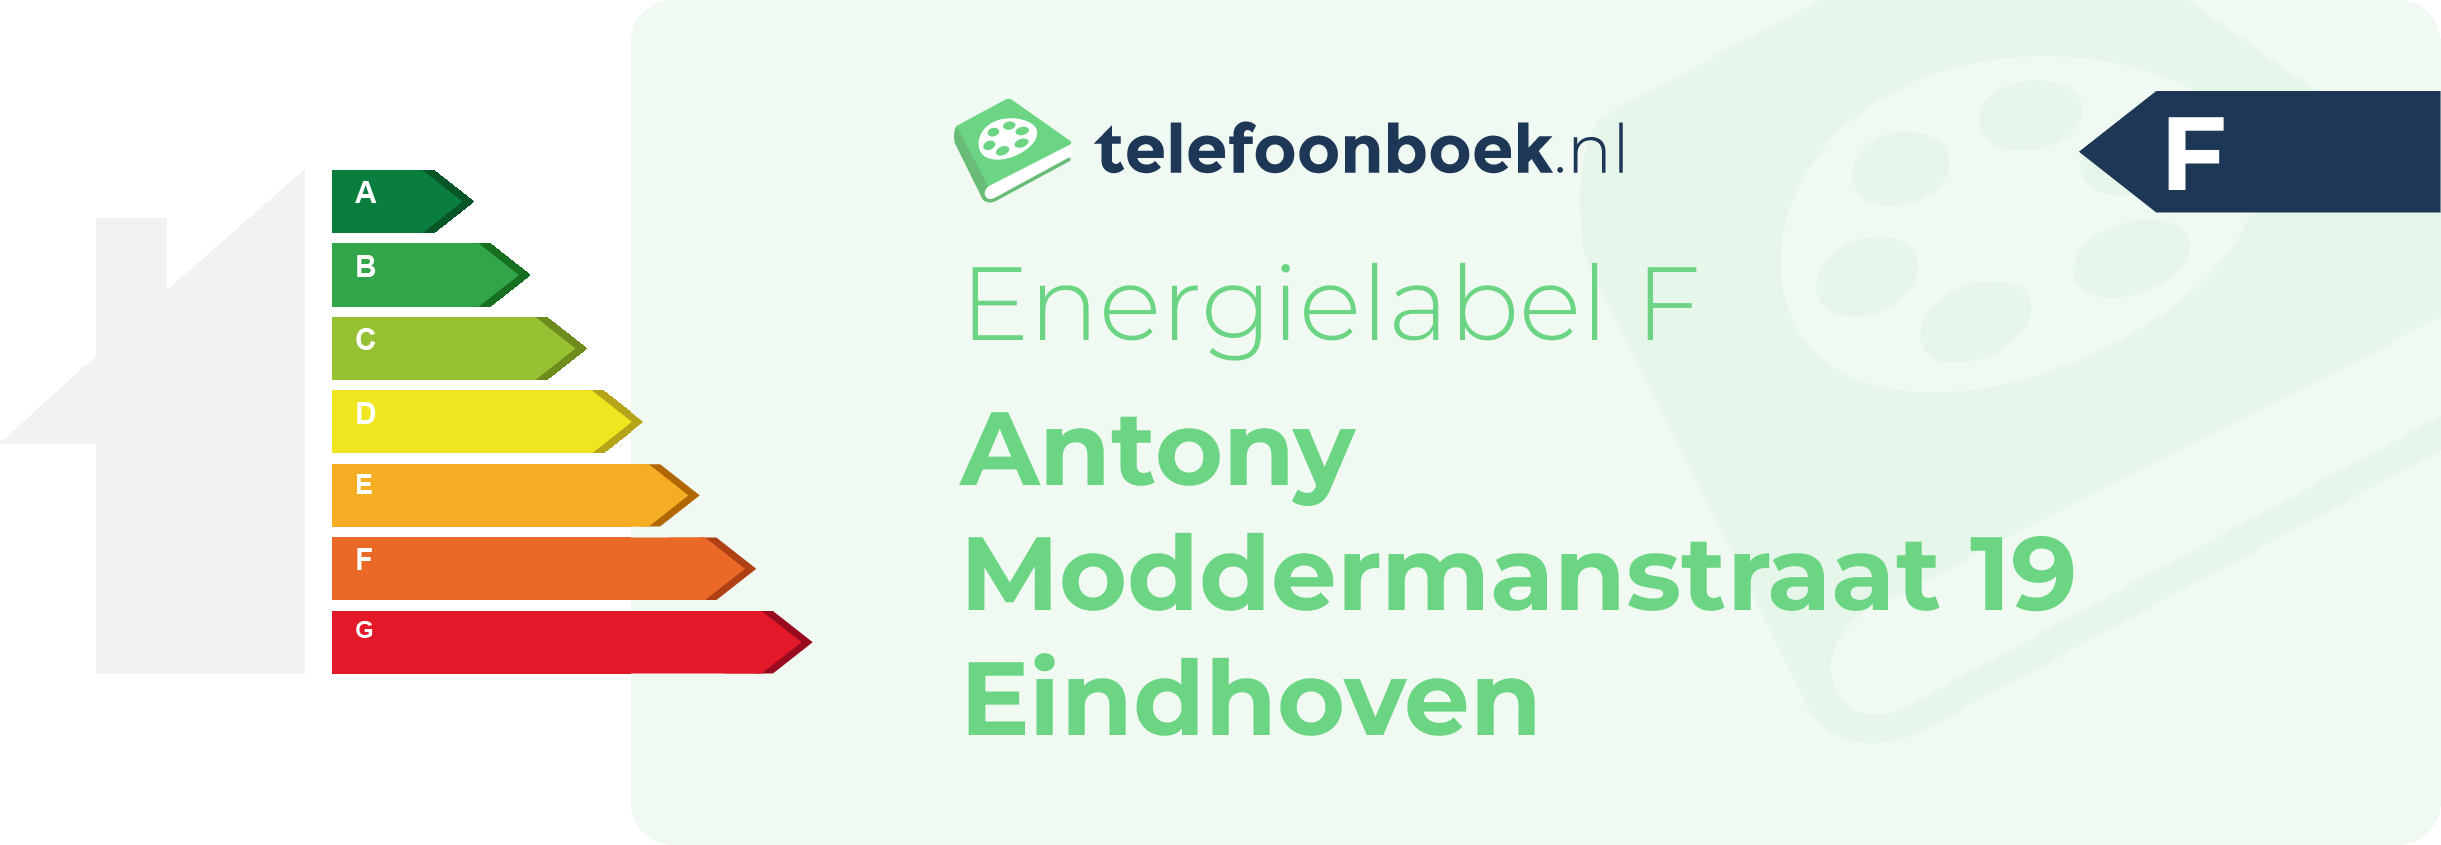 Energielabel Antony Moddermanstraat 19 Eindhoven